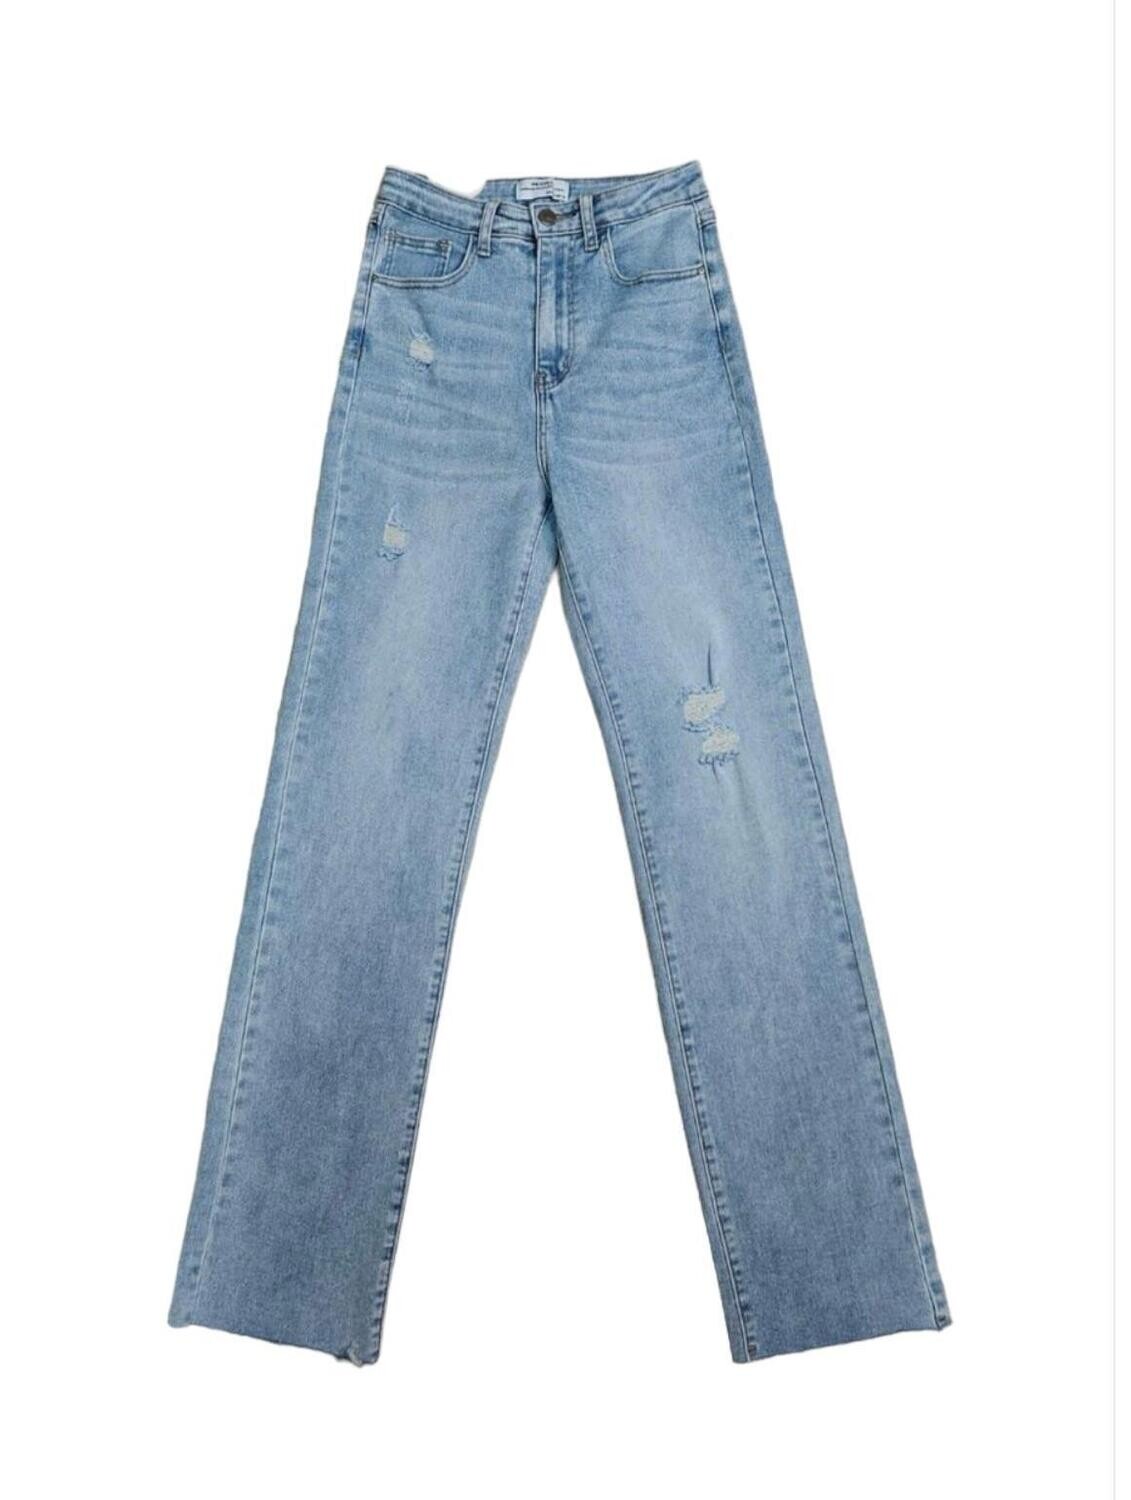 Nameless
Streight jeans rafels med blue RD2357